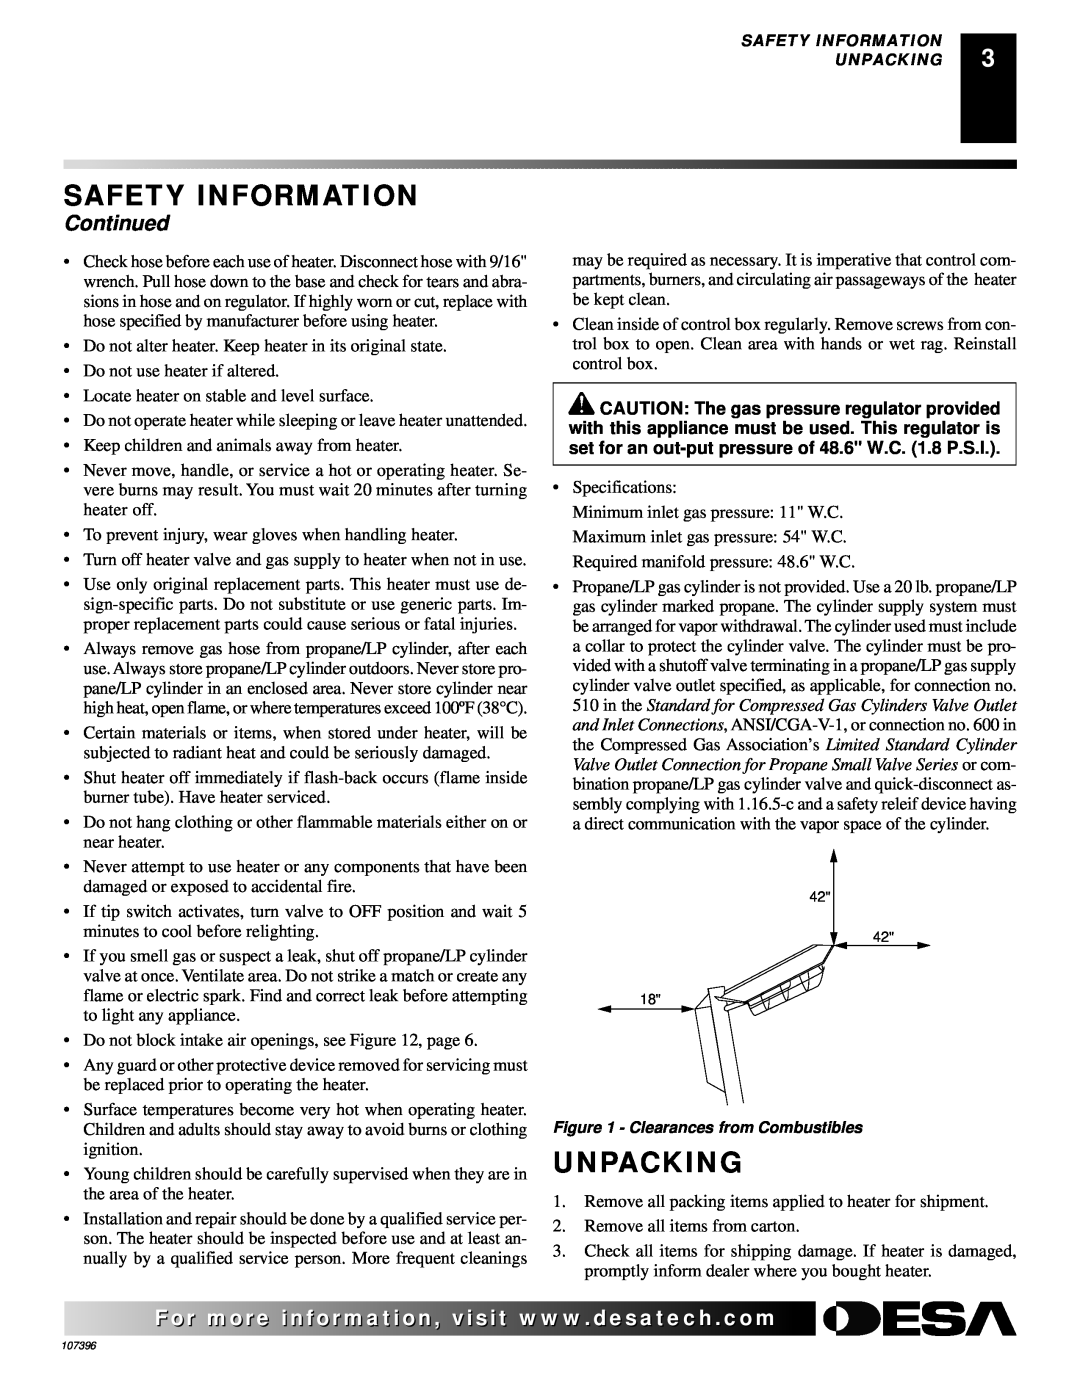 Desa 28BN installation manual Unpacking, Continued, Safety Information 